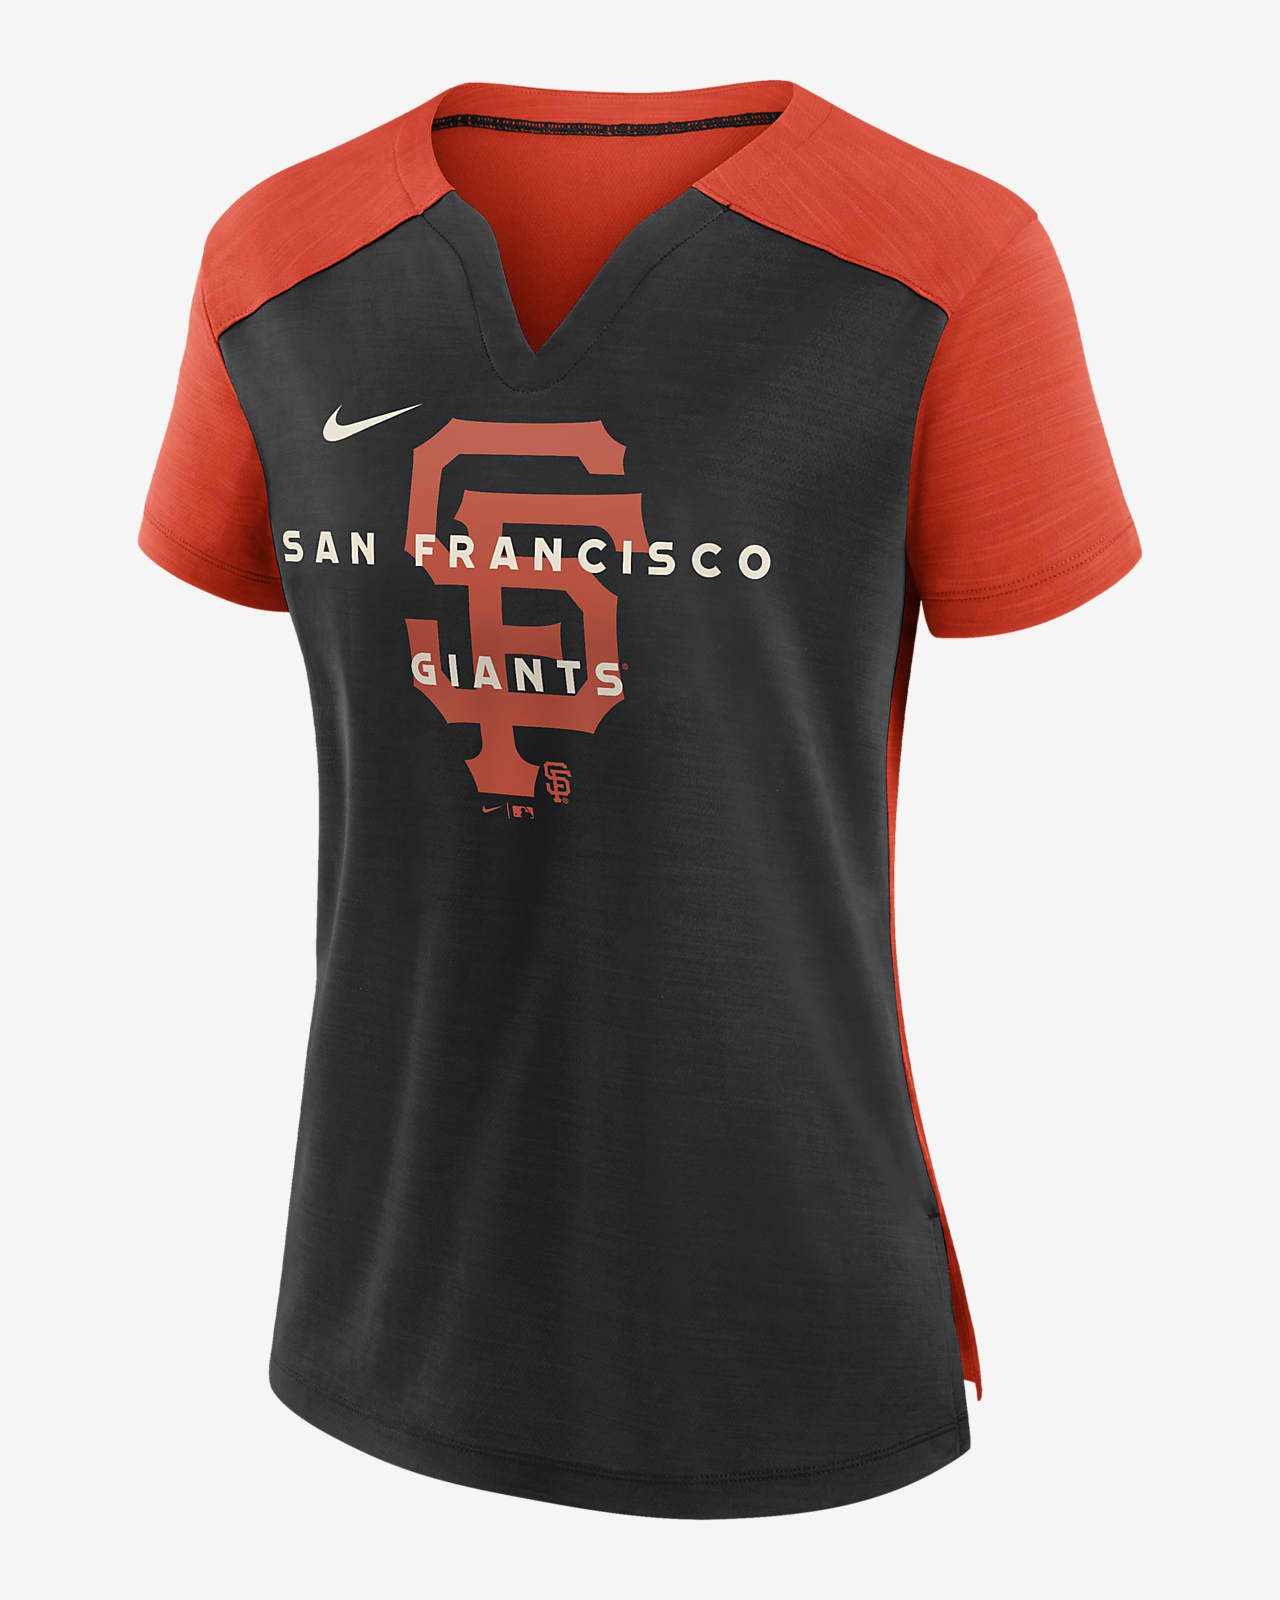  Nike San Francisco Giants Women's Tri-Blend 3/4-Sleeve